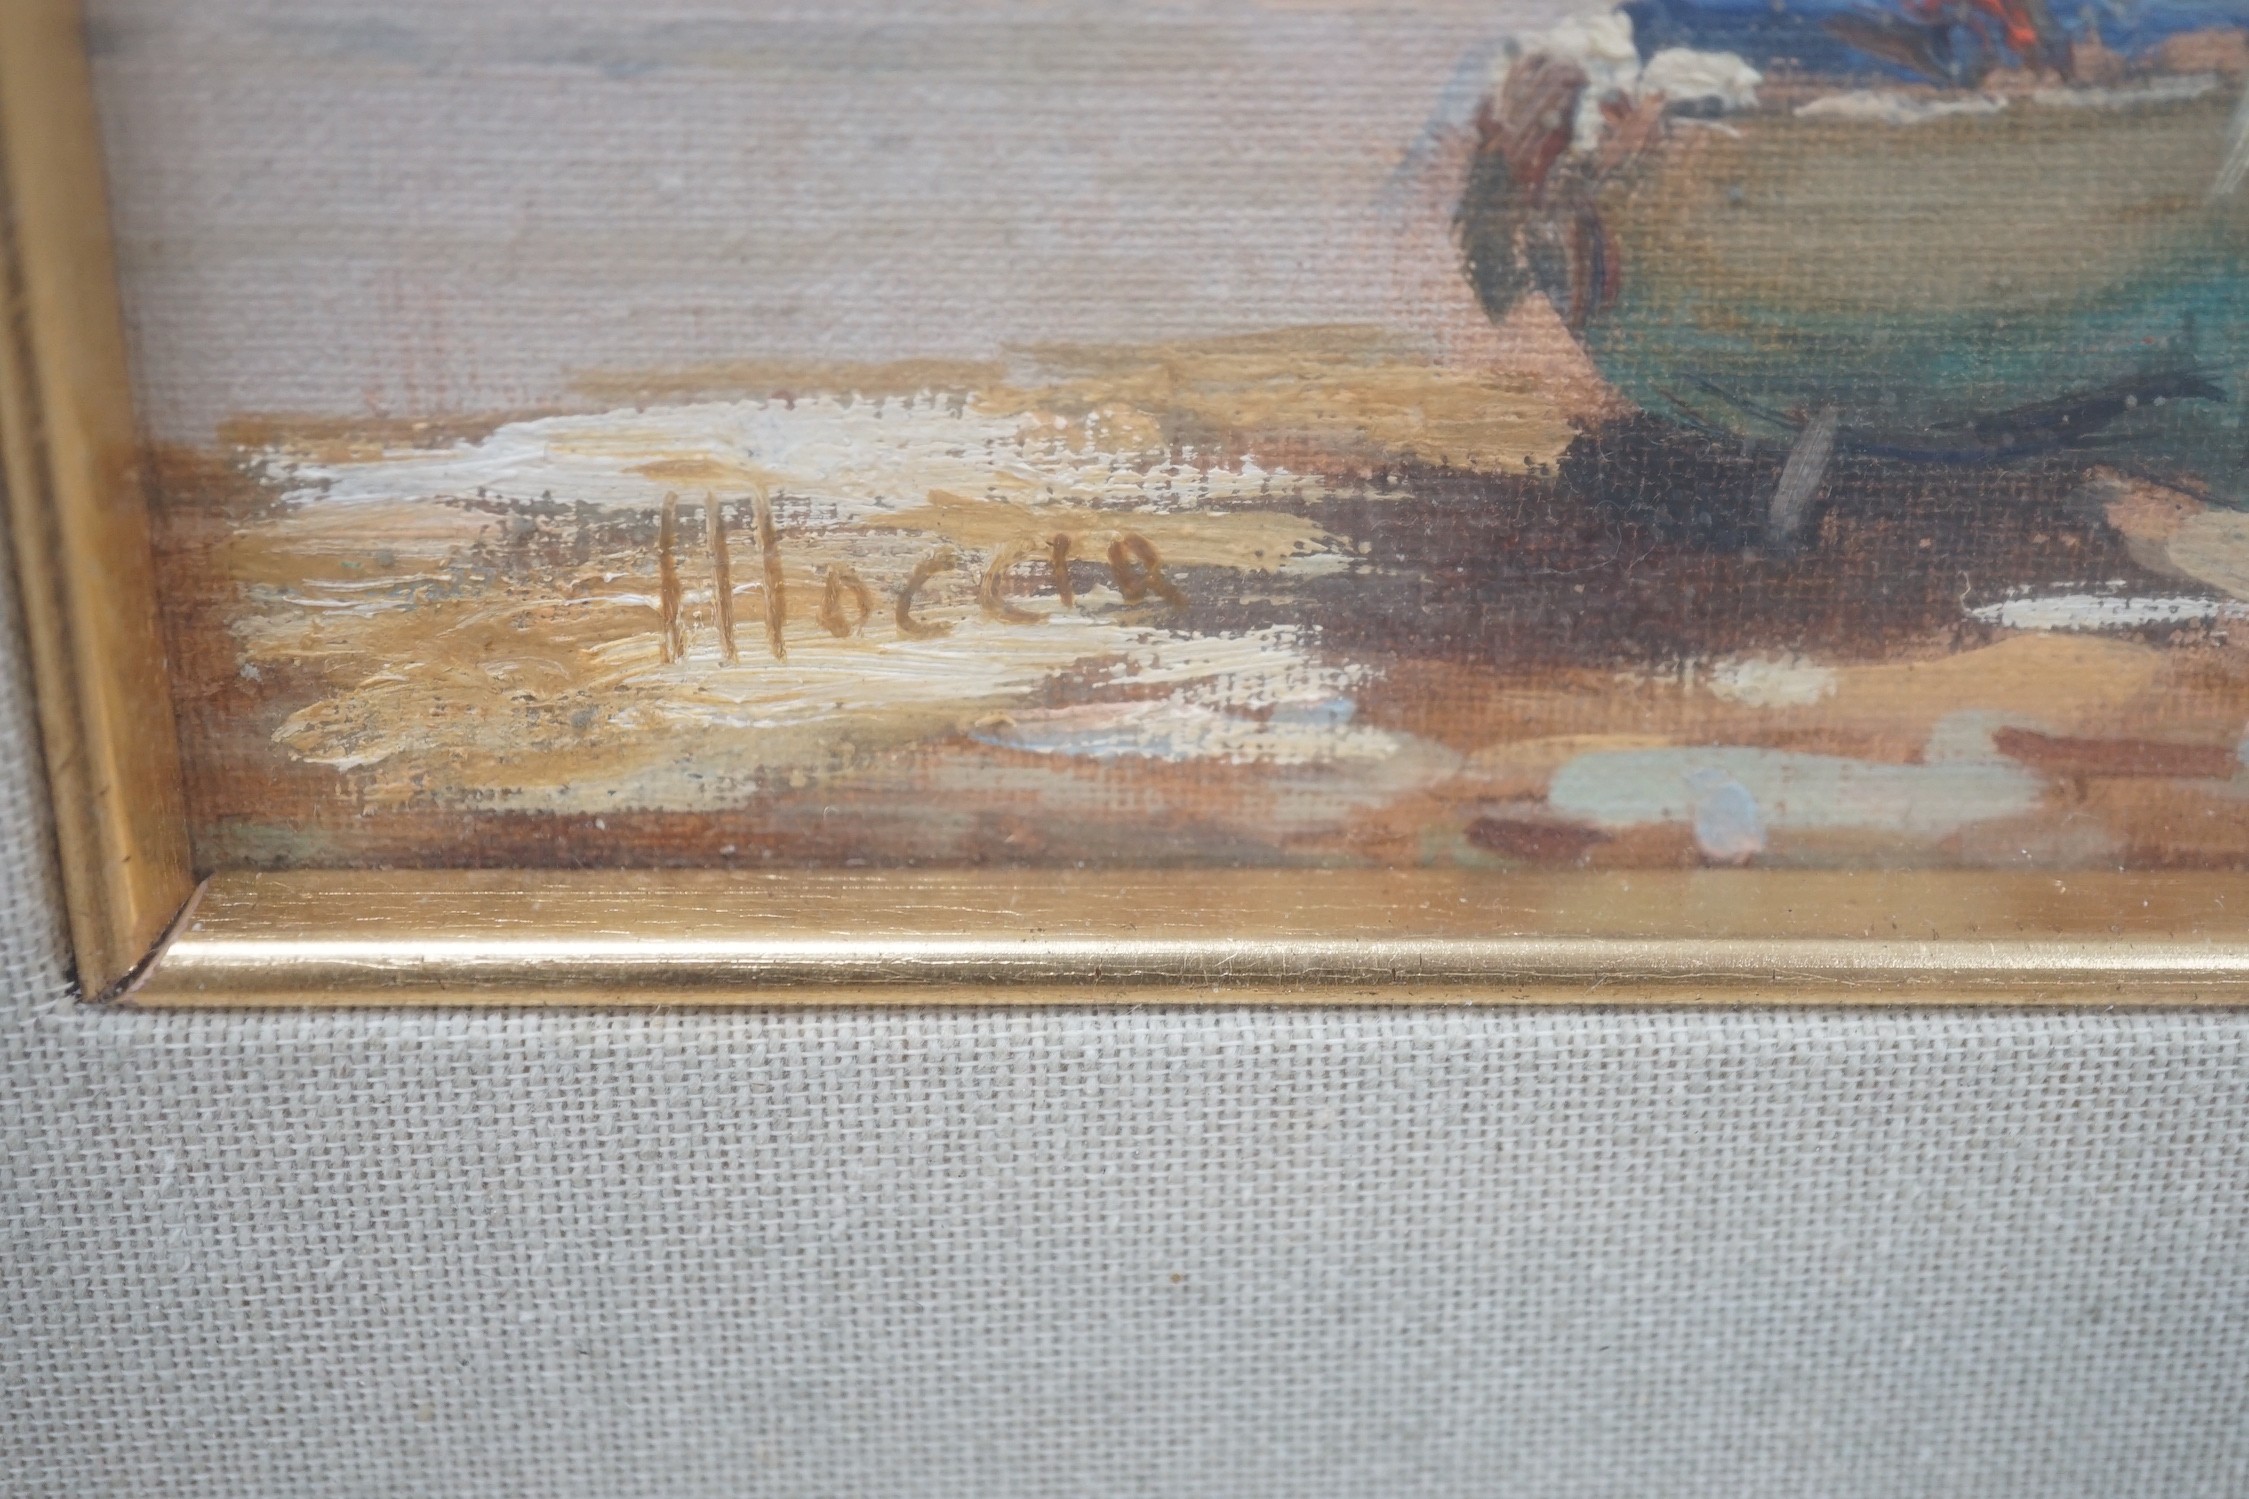 Antonio Moccia, oil on board, 'Coastal scene, Sorrento', signed, 19 x 28cm